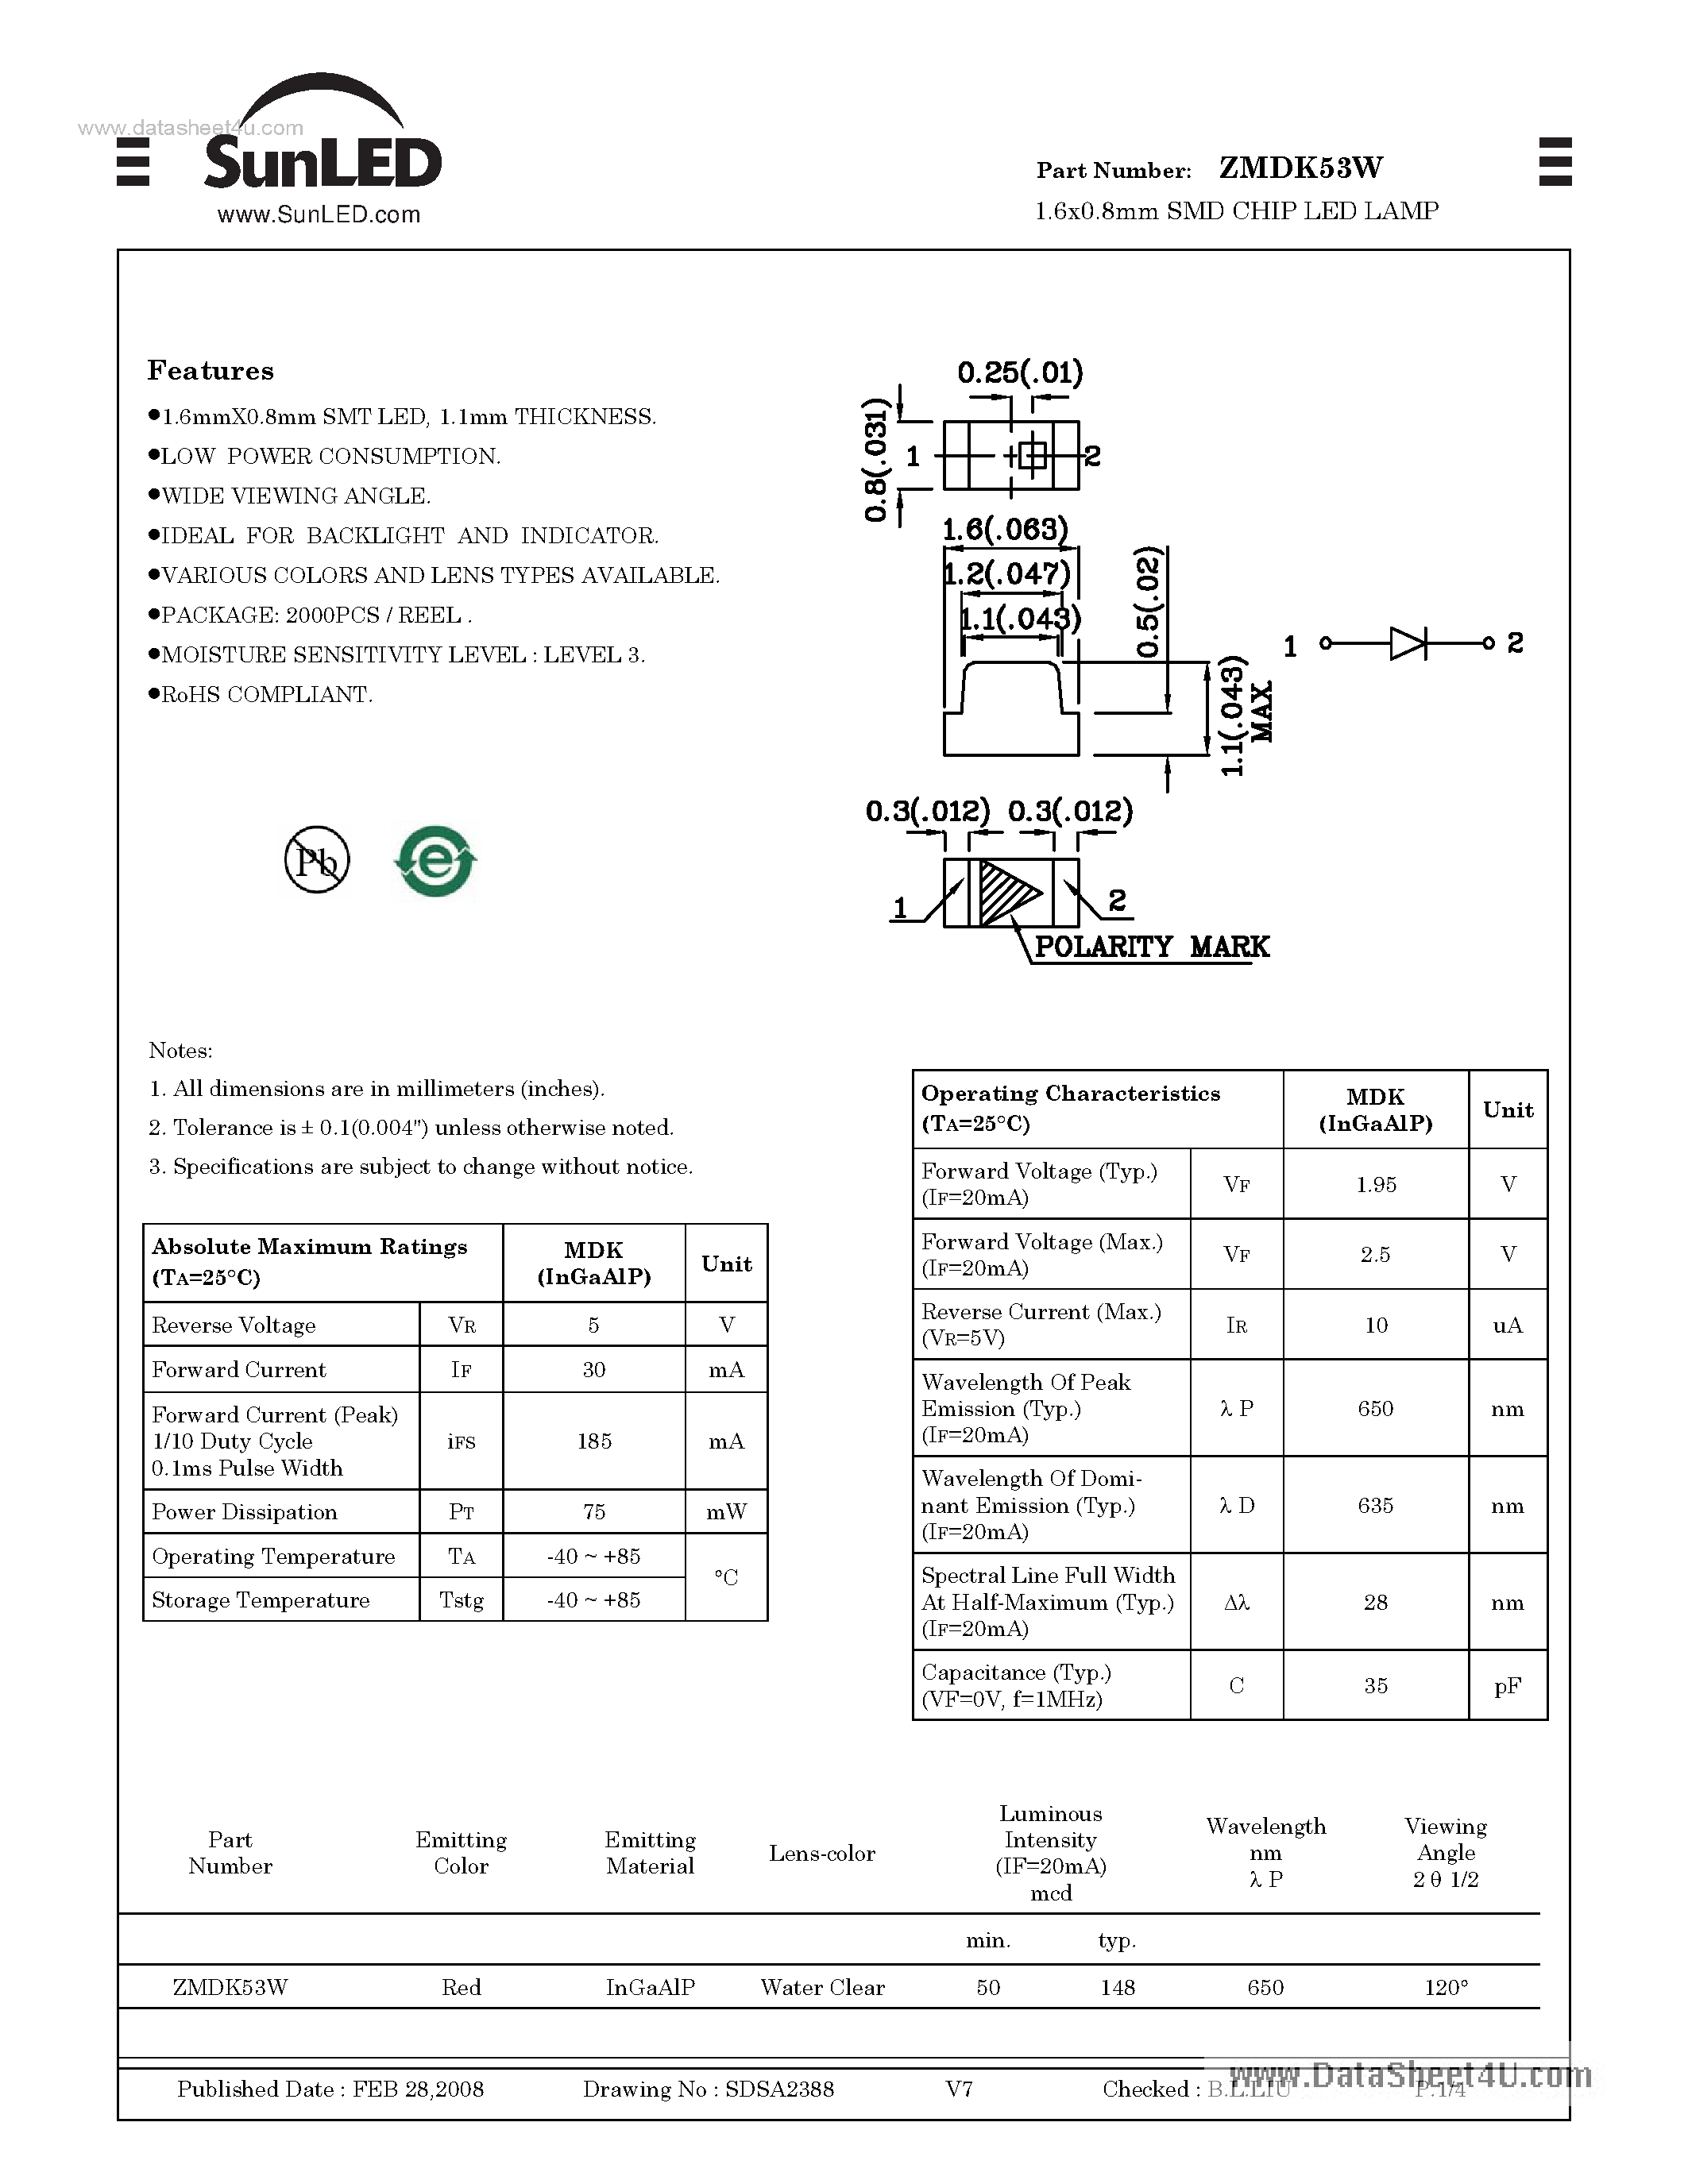 Datasheet ZMDK53W - 1.6x0.8mm SMD CHIP LED LAMP page 1